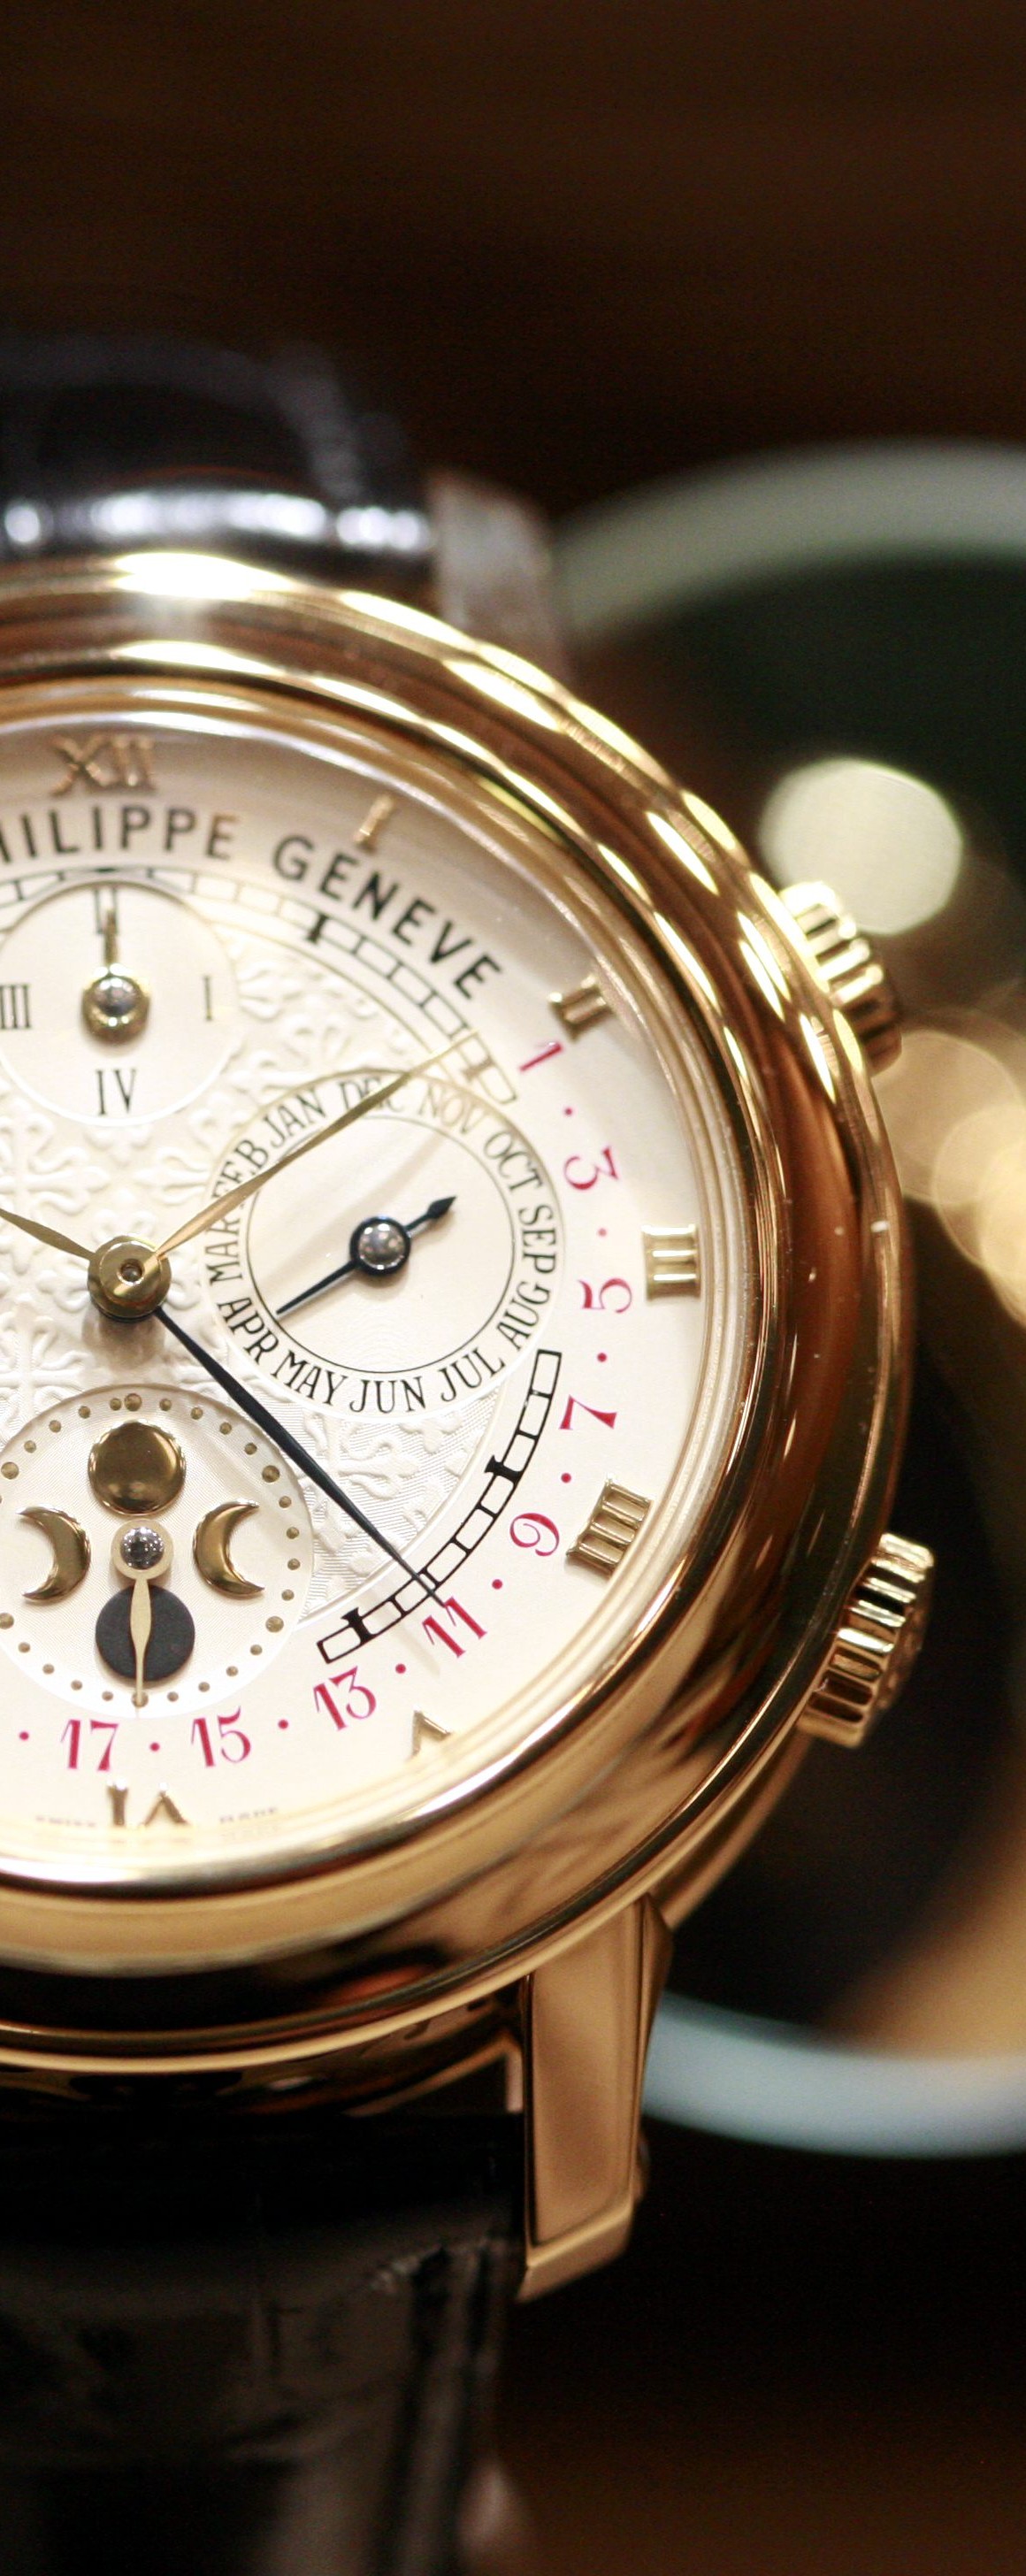 Patek Philippe replica watches